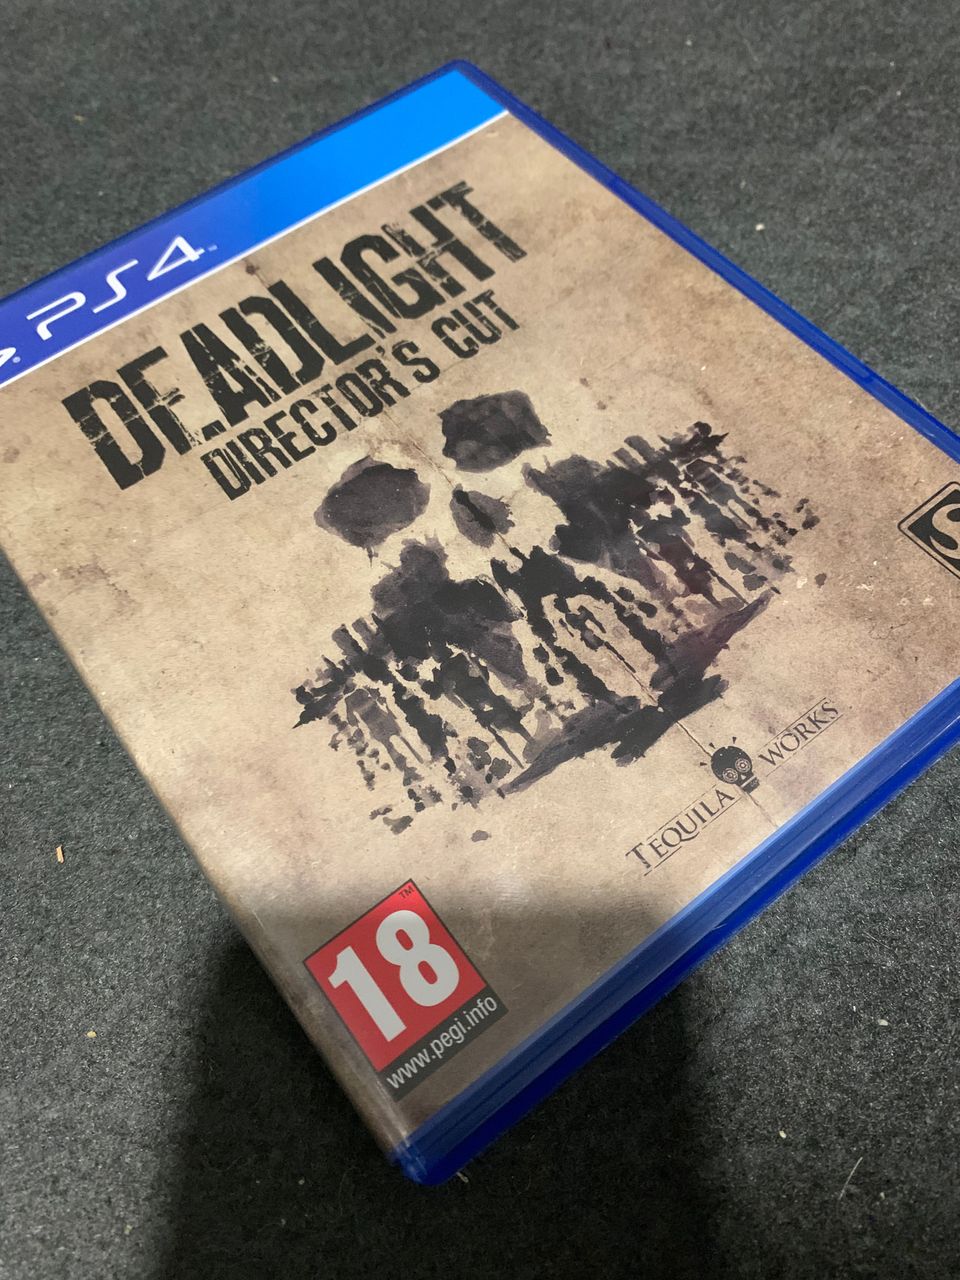 PS4 Deadlight Director’s Cut